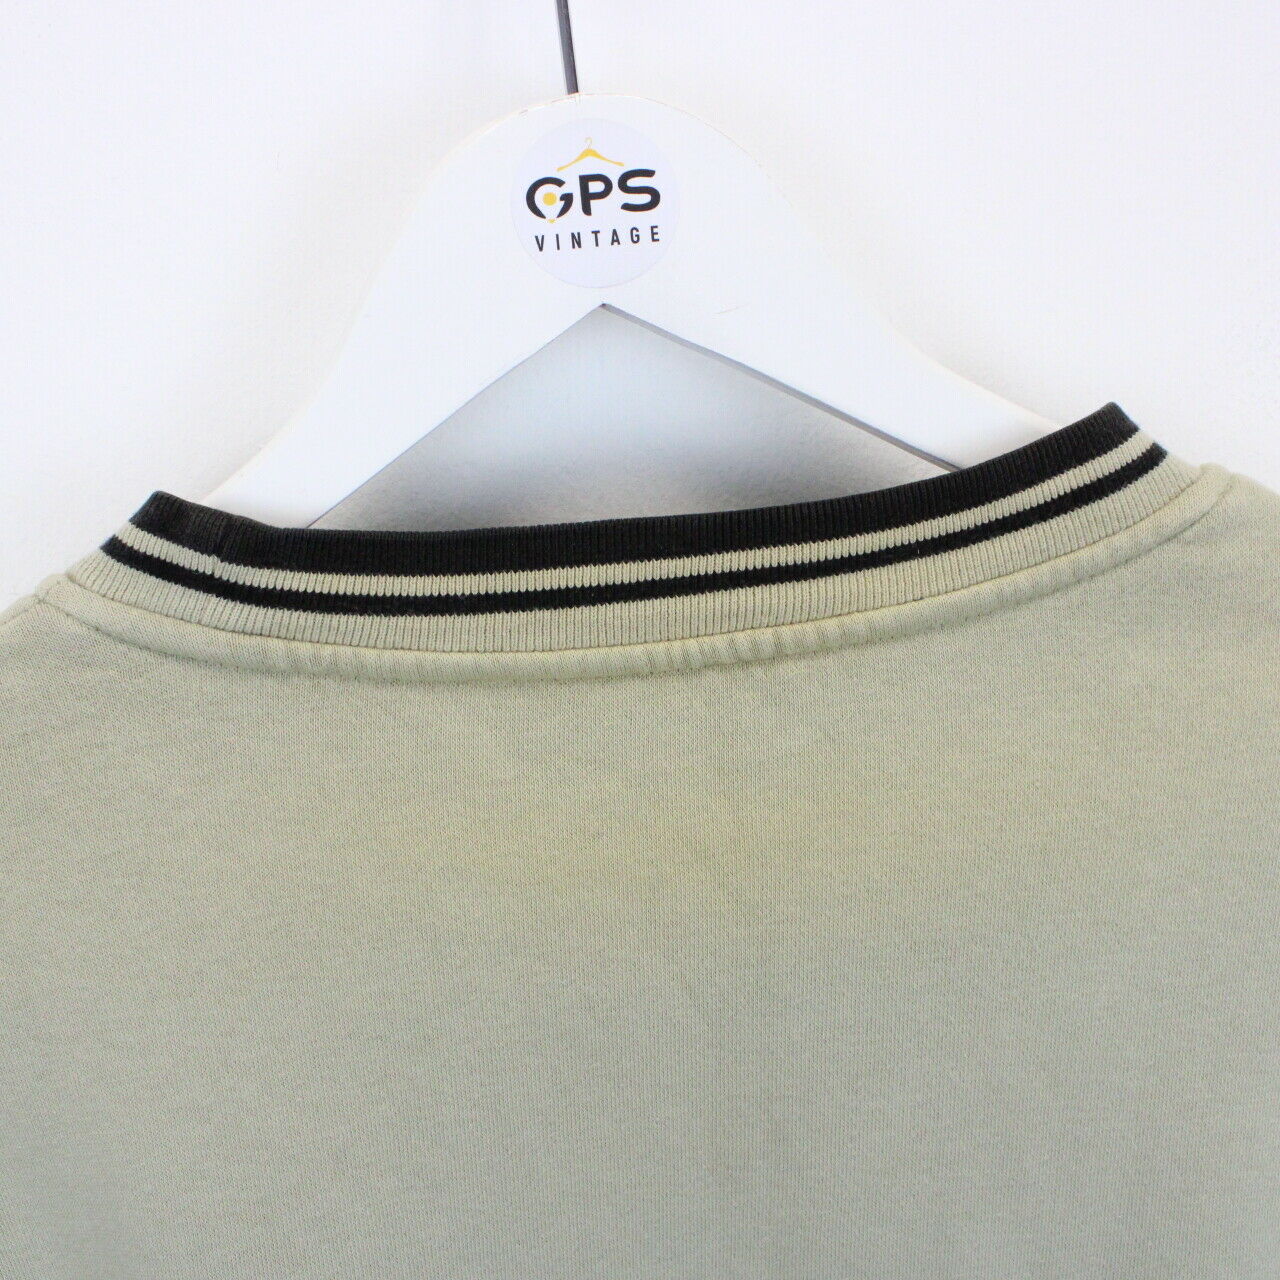 Vintage FILA Sweatshirt Beige | XL